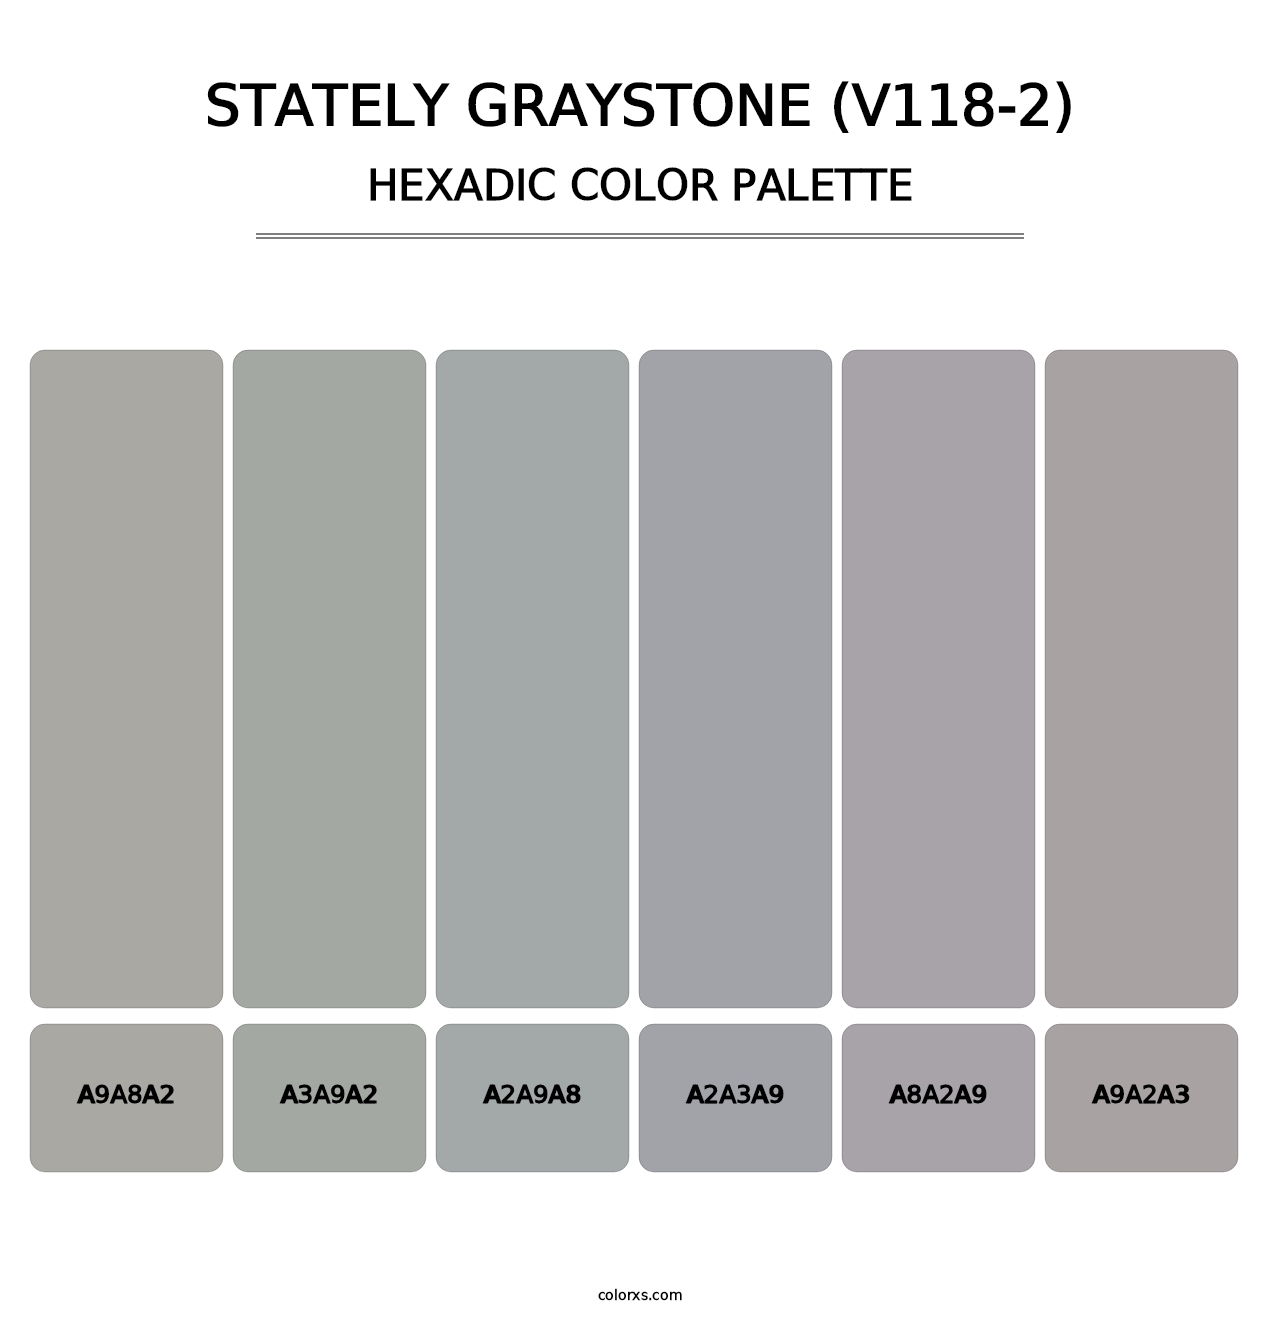 Stately Graystone (V118-2) - Hexadic Color Palette